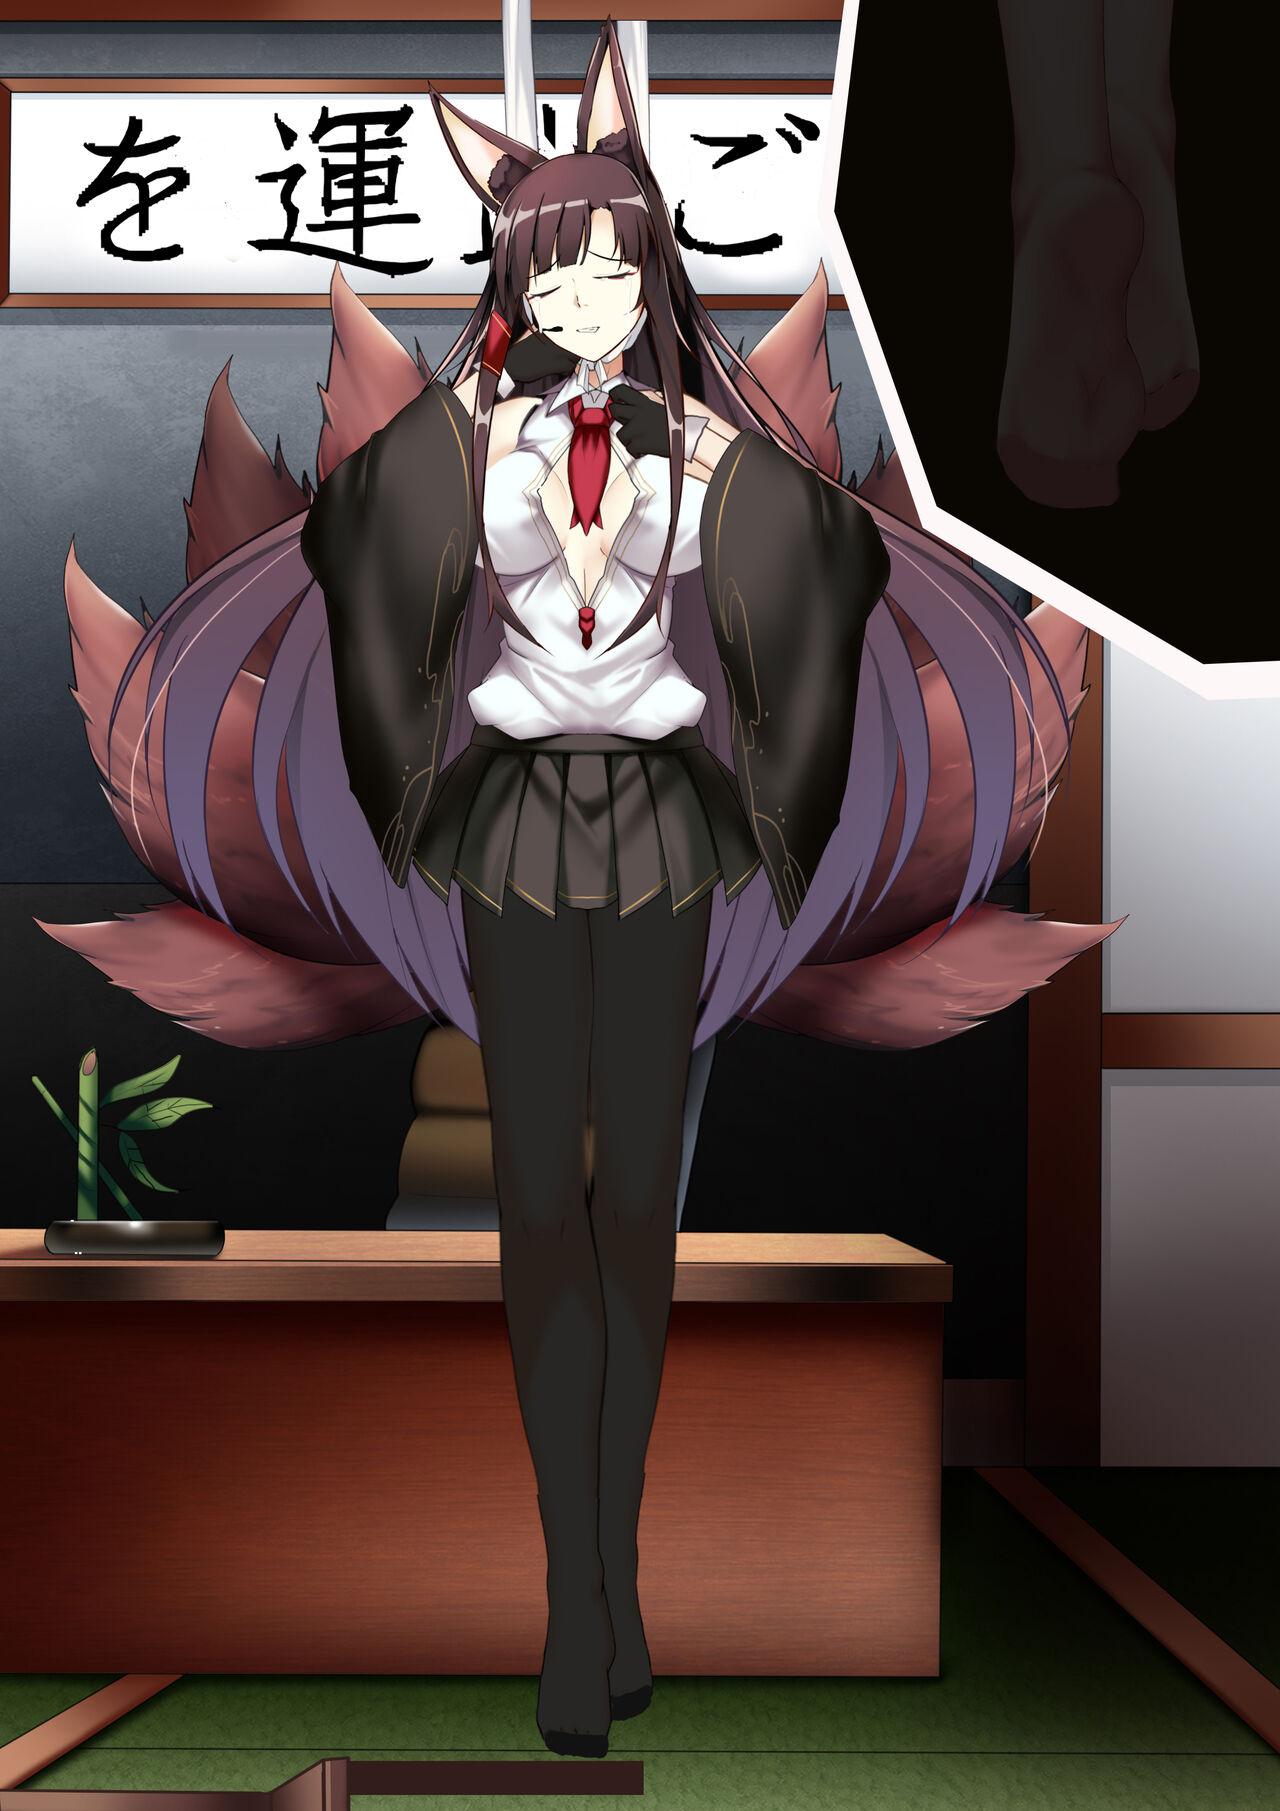 Akagi hanged herself in her office 34